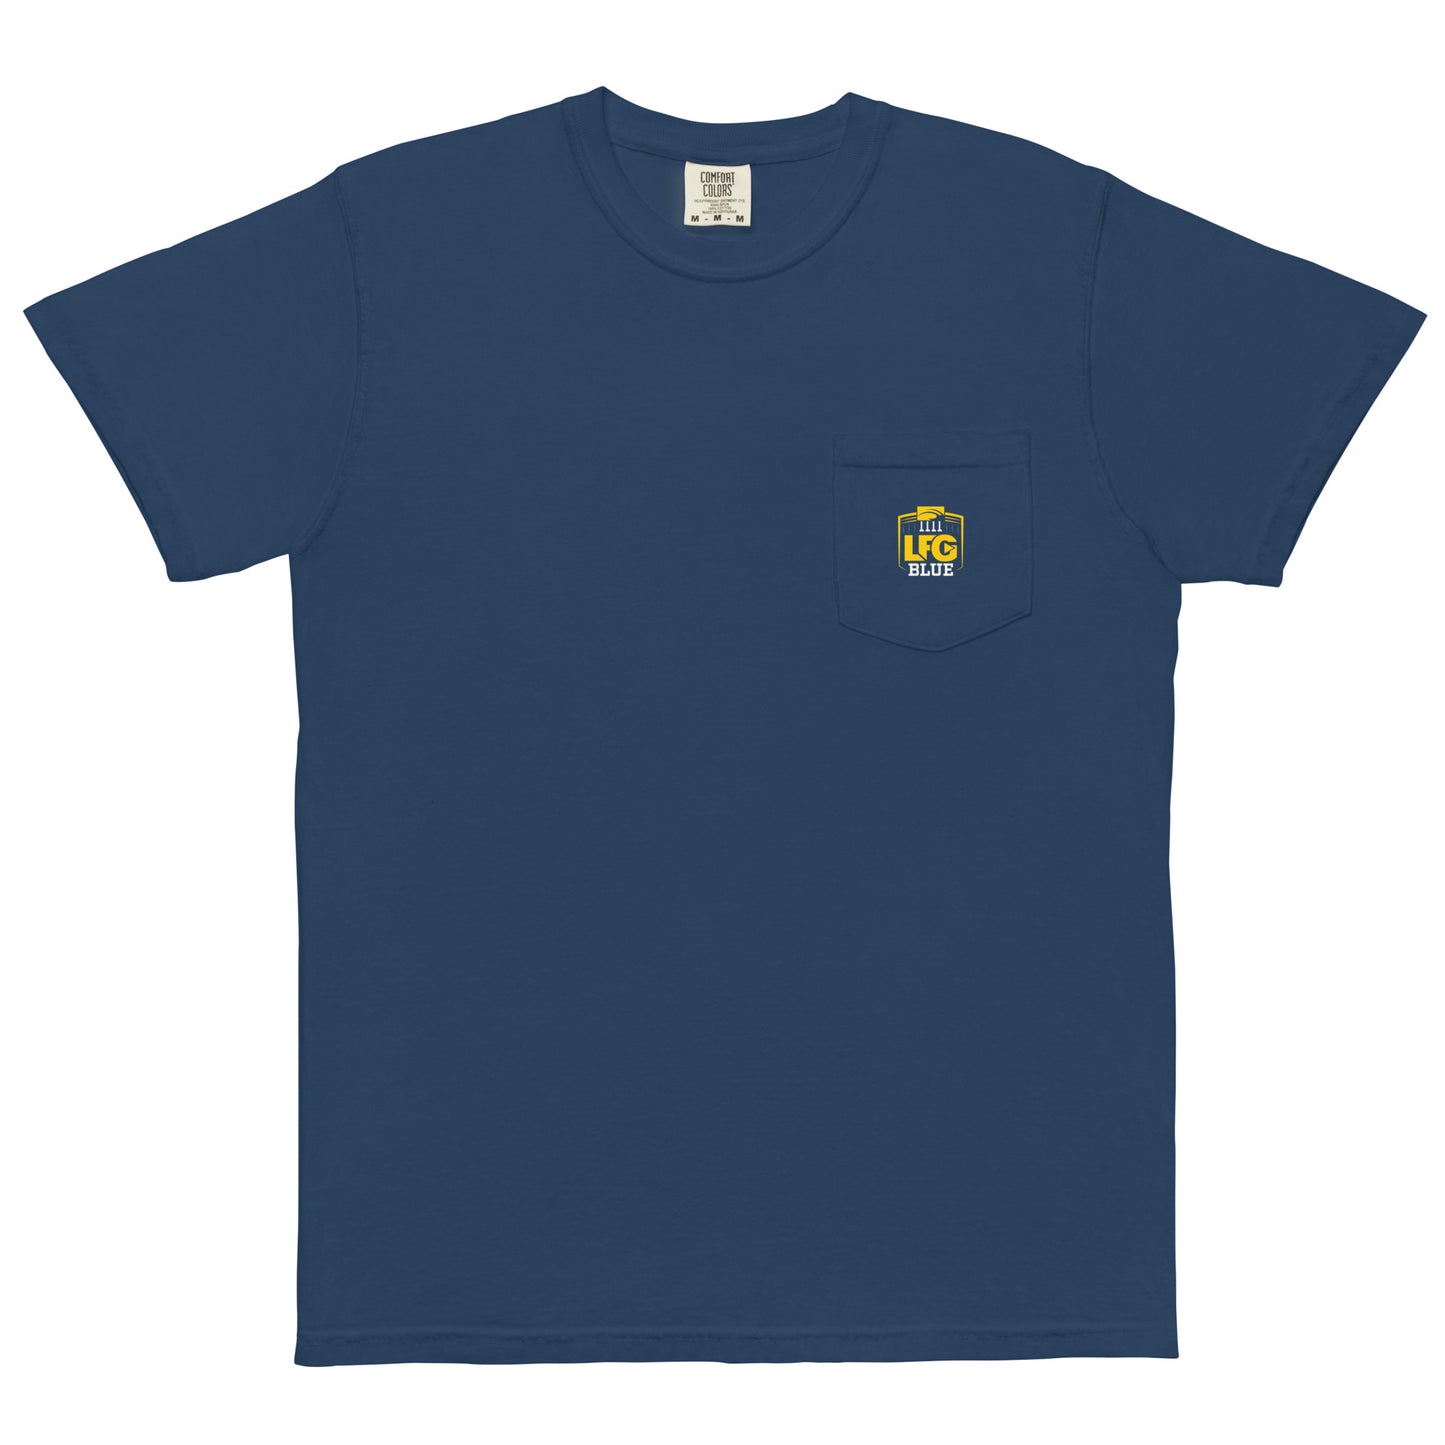 LFG BLUE comfort colors pocket t-shirt